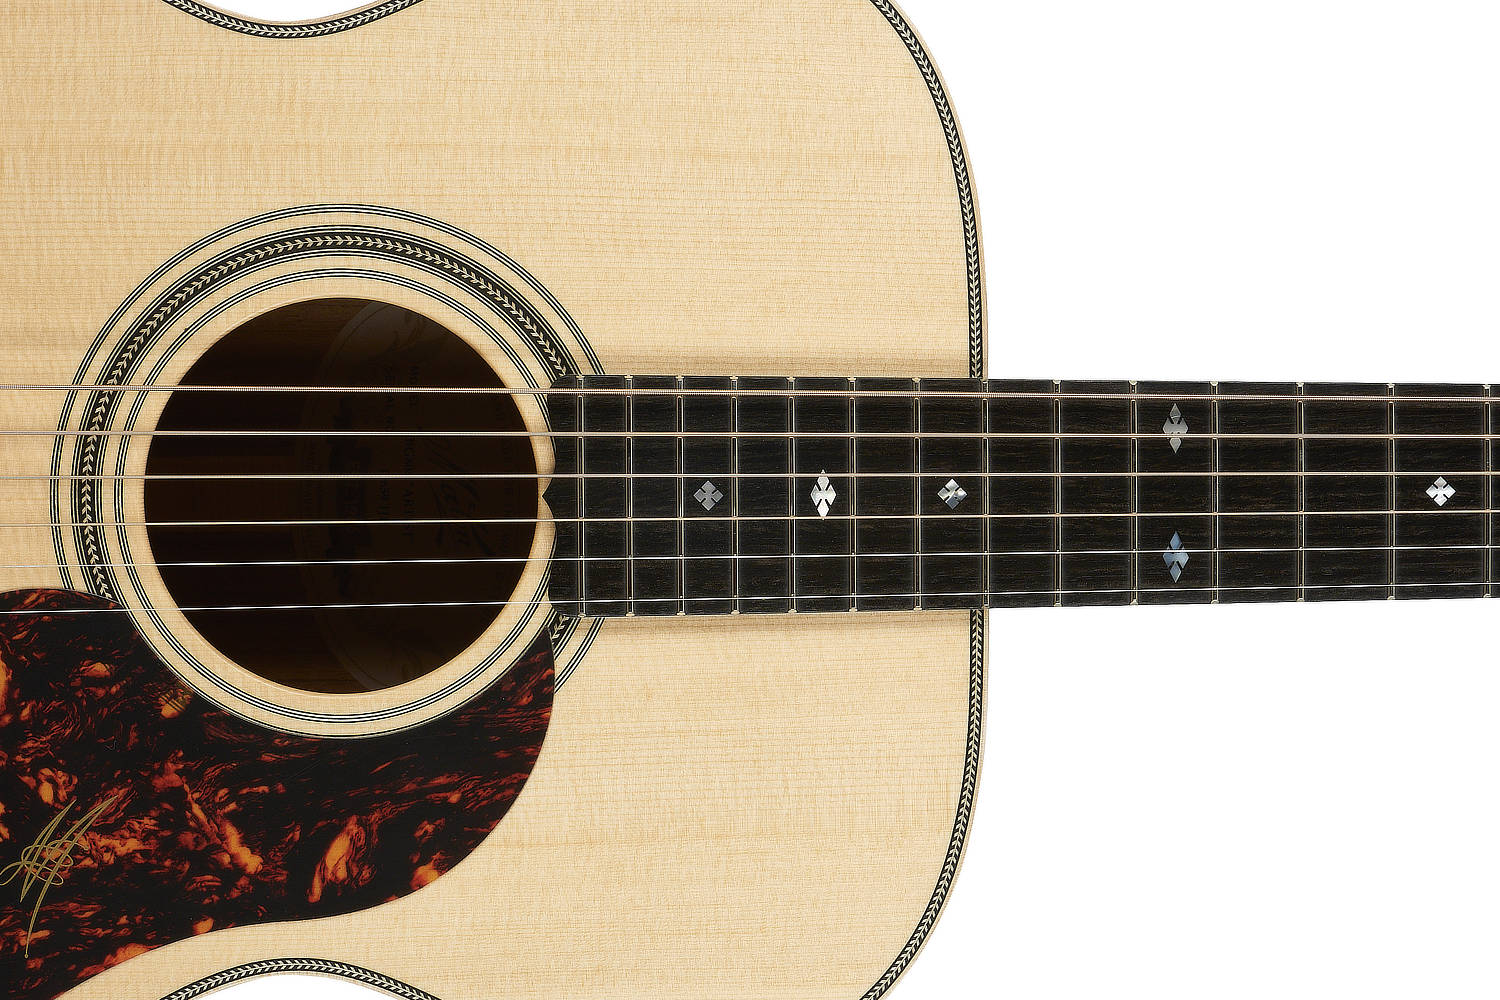 Maton EBG808 Artist Acoustic Guitar